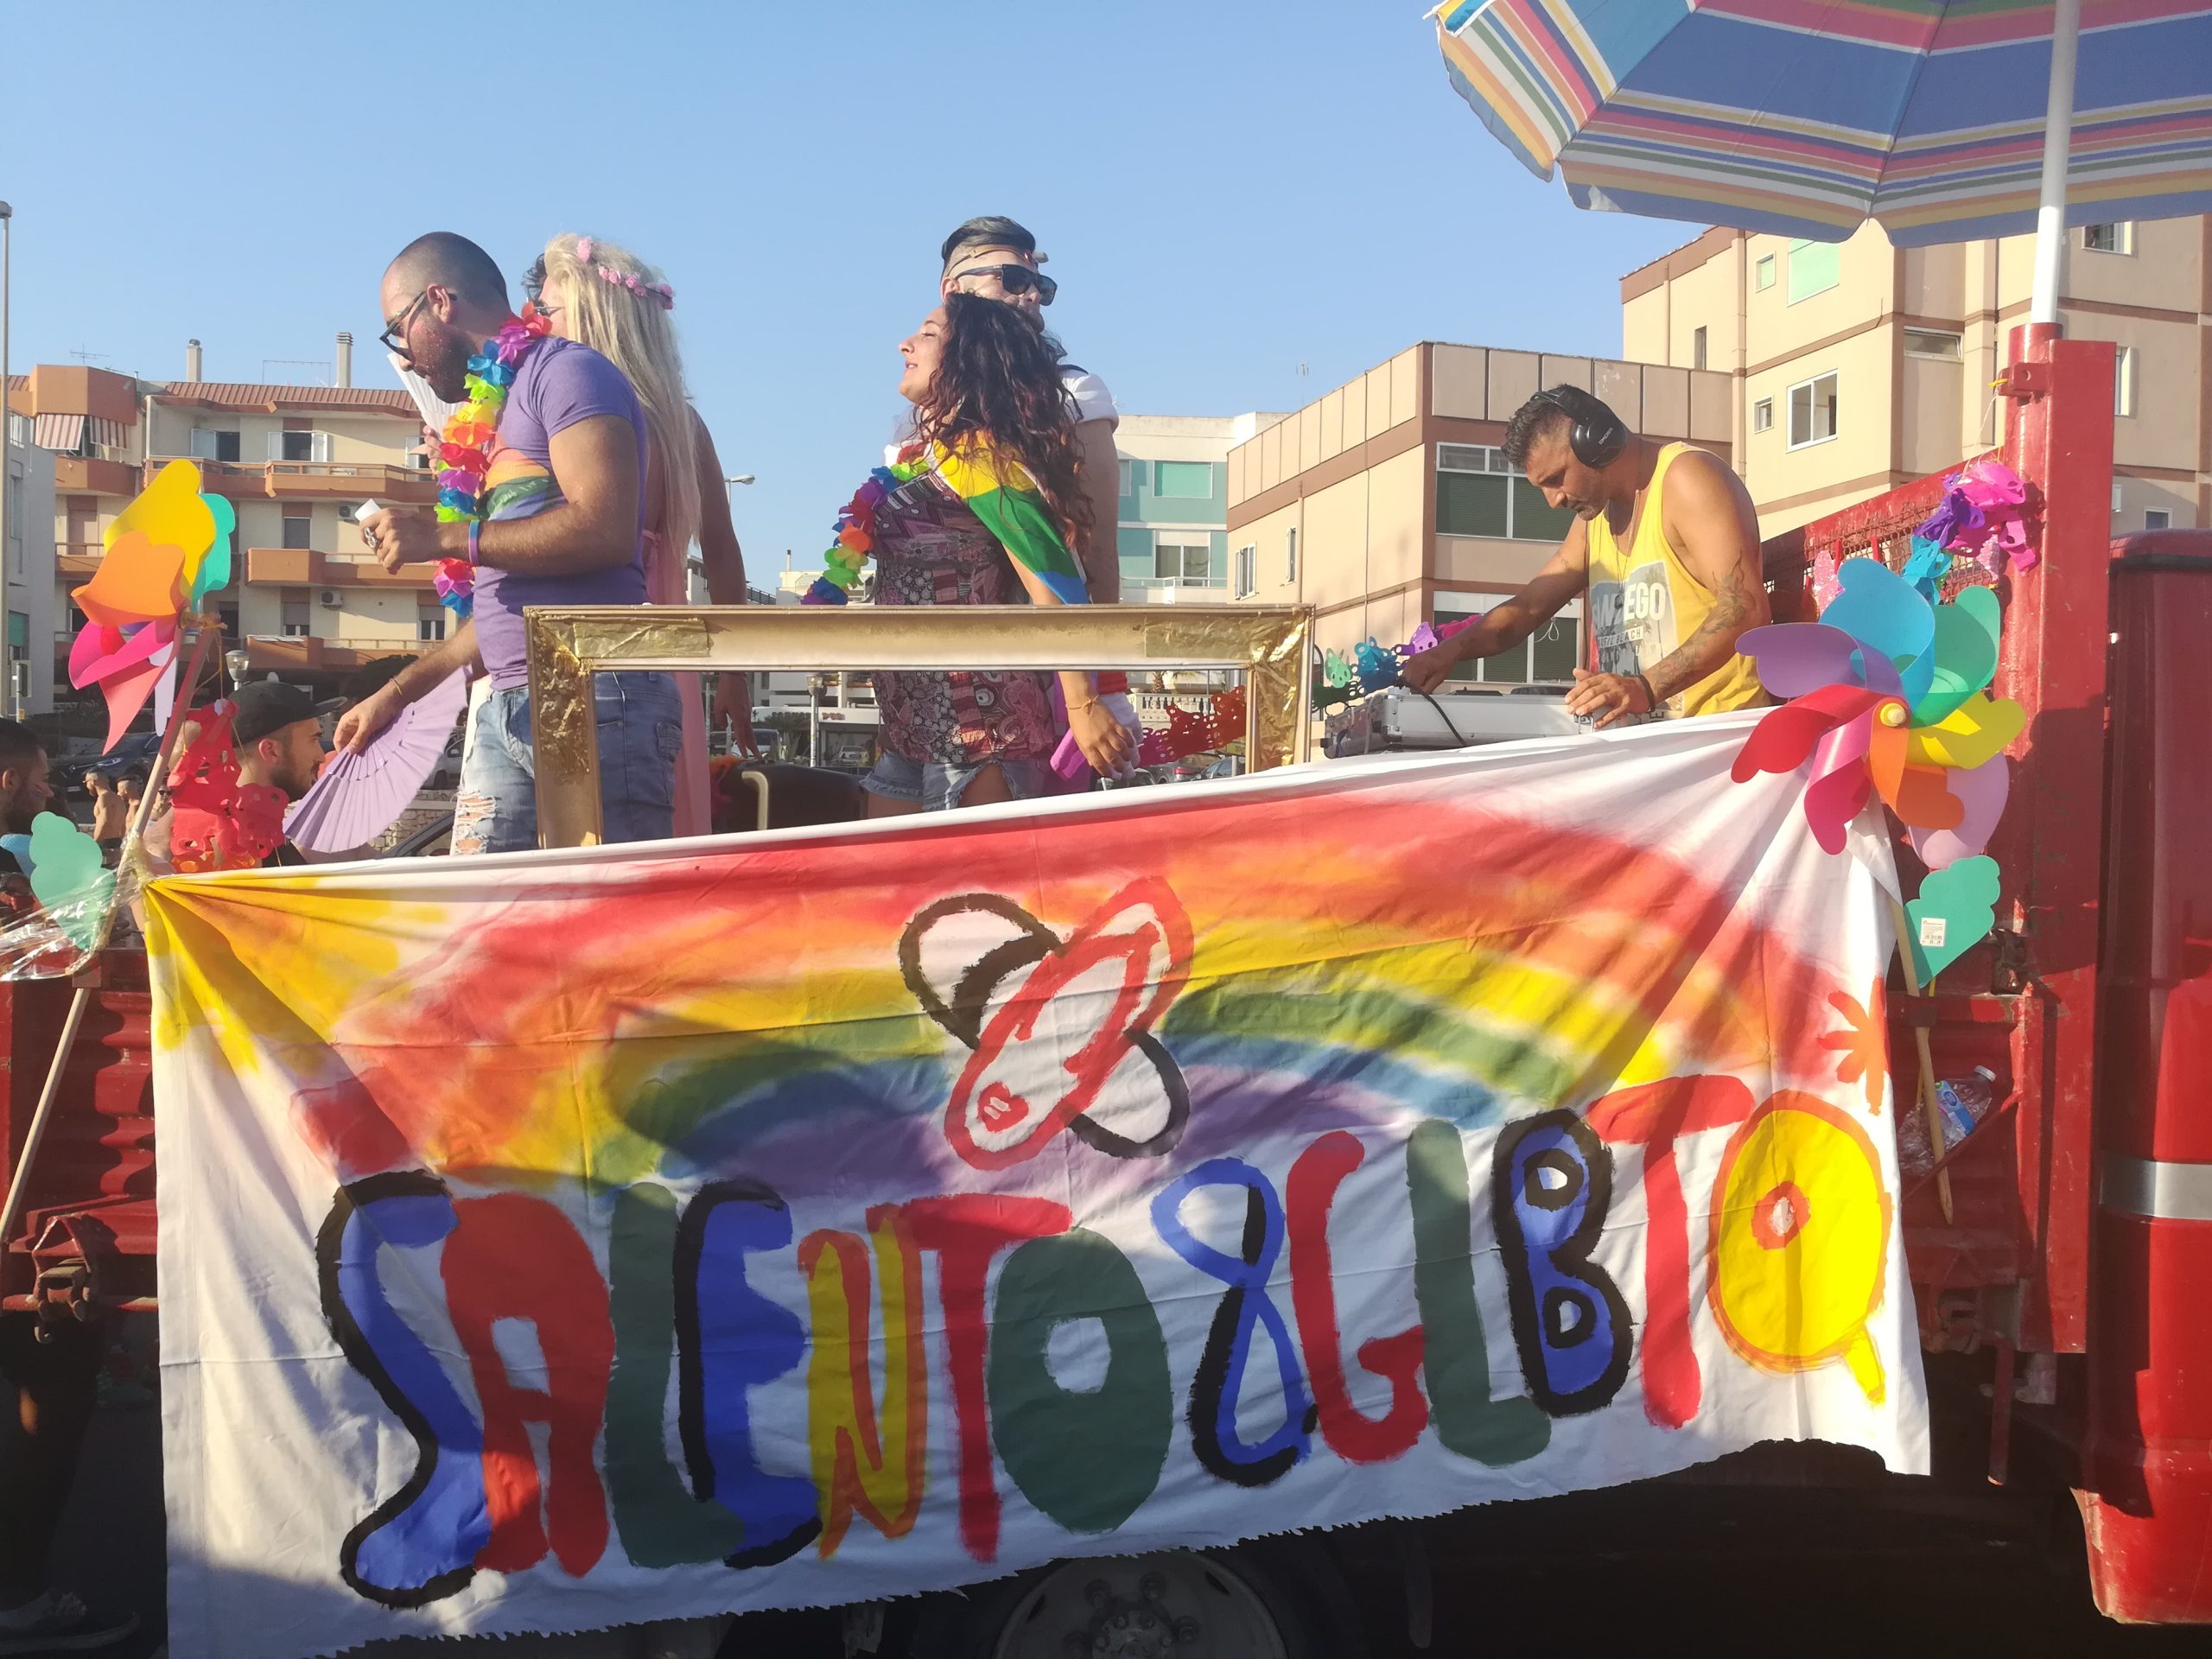 Salento Pride